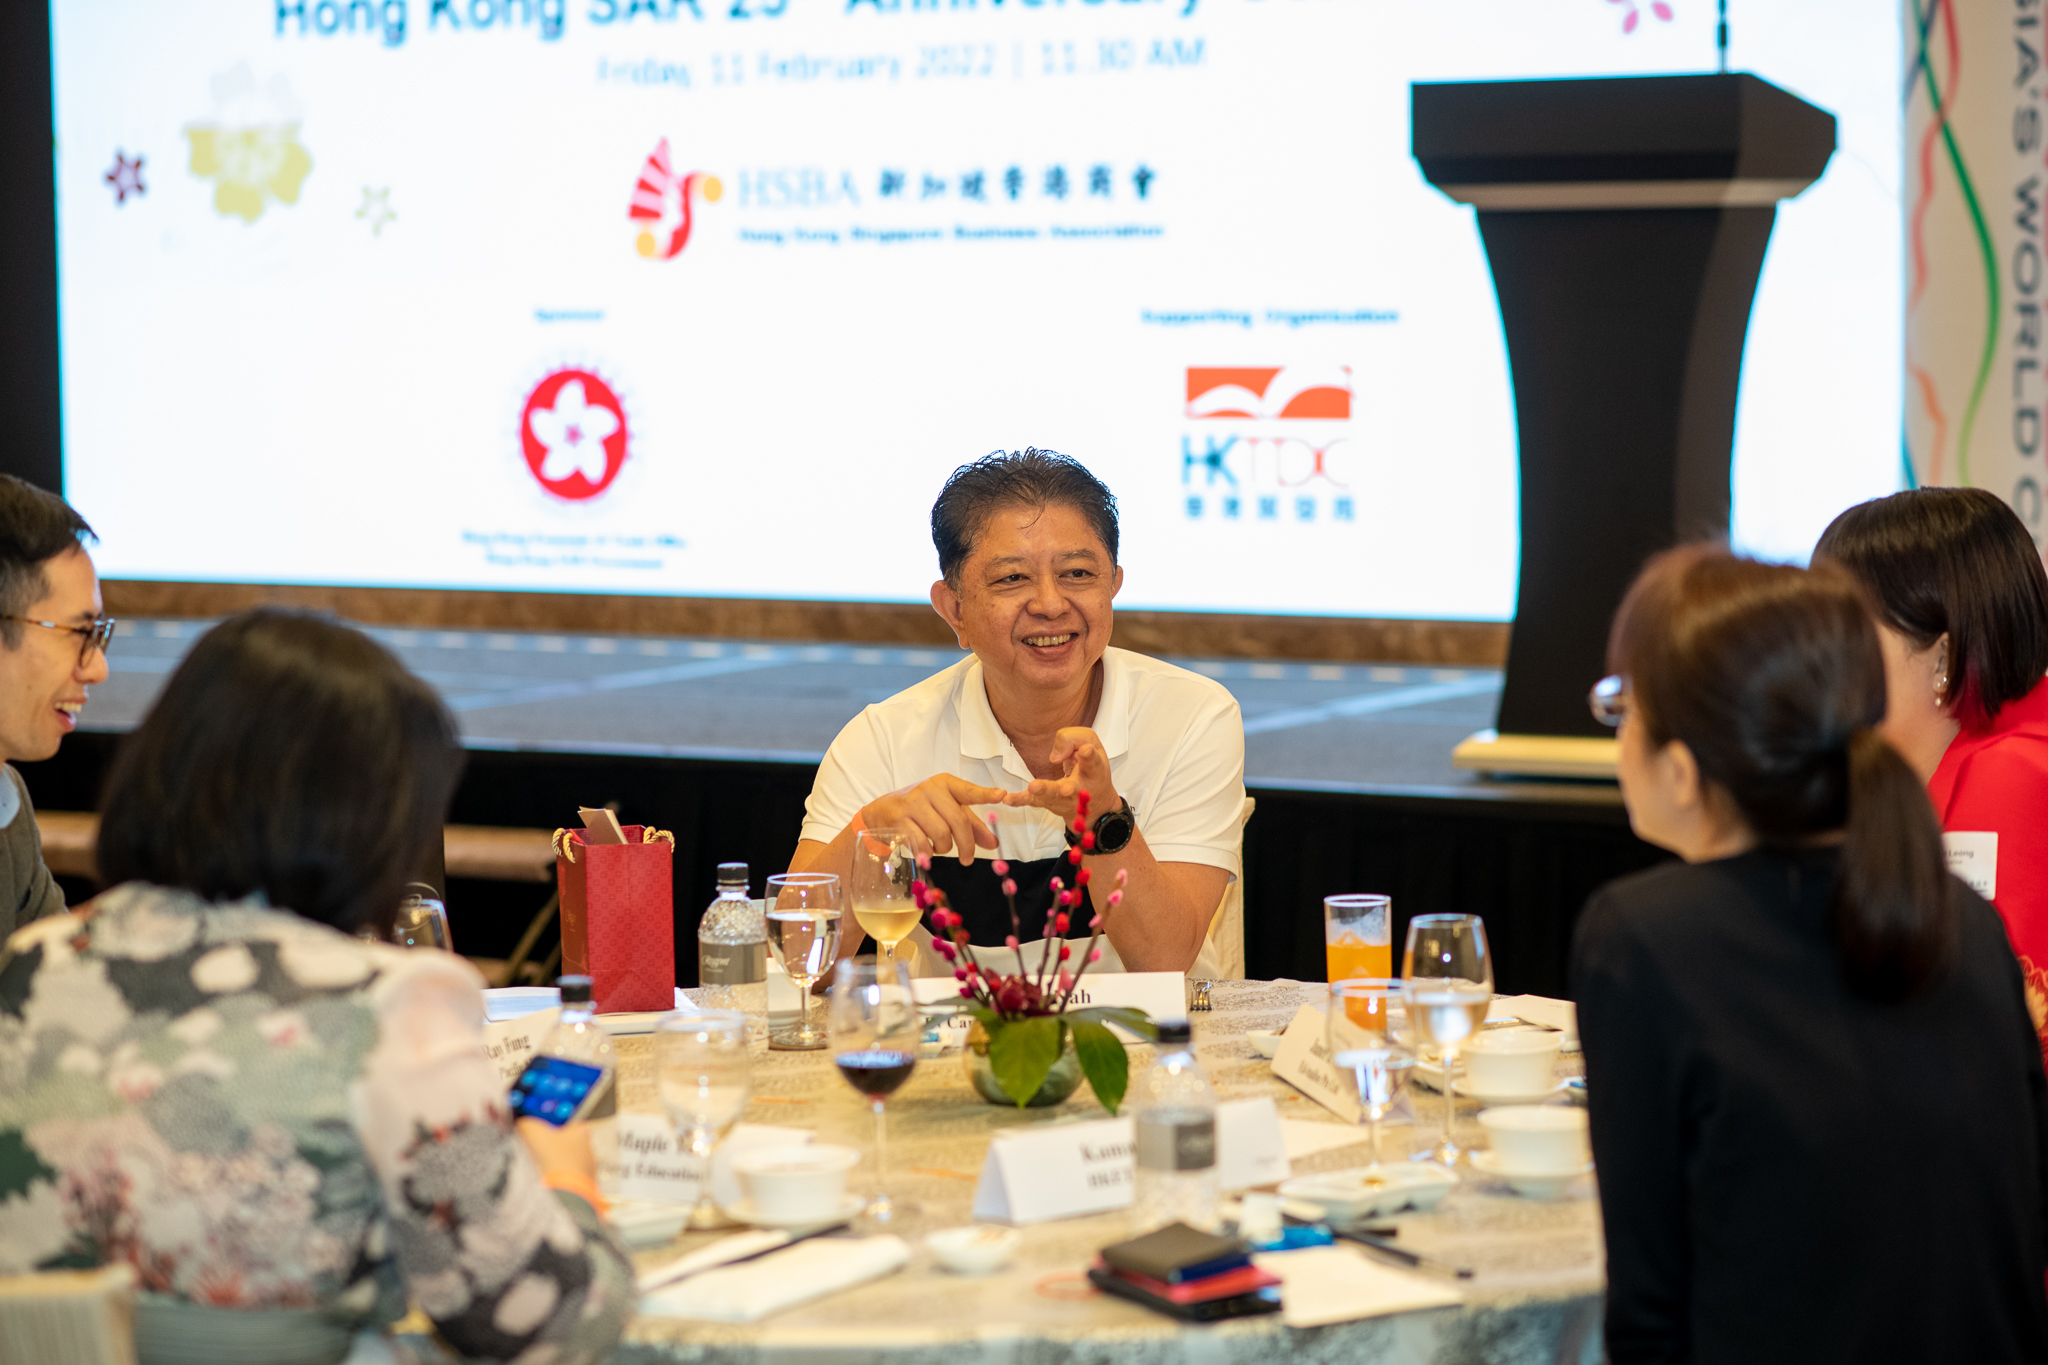 HSBA CNY Business Luncheon & Hong Kong SAR 25th Anniversary Celebration_0125.JPG